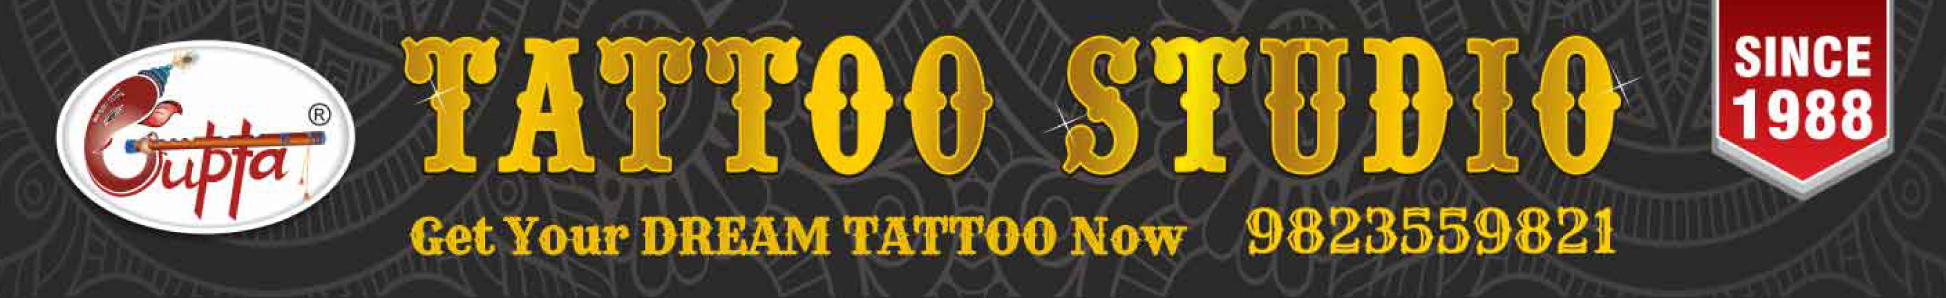 Gupta Tattoo Studio Goa